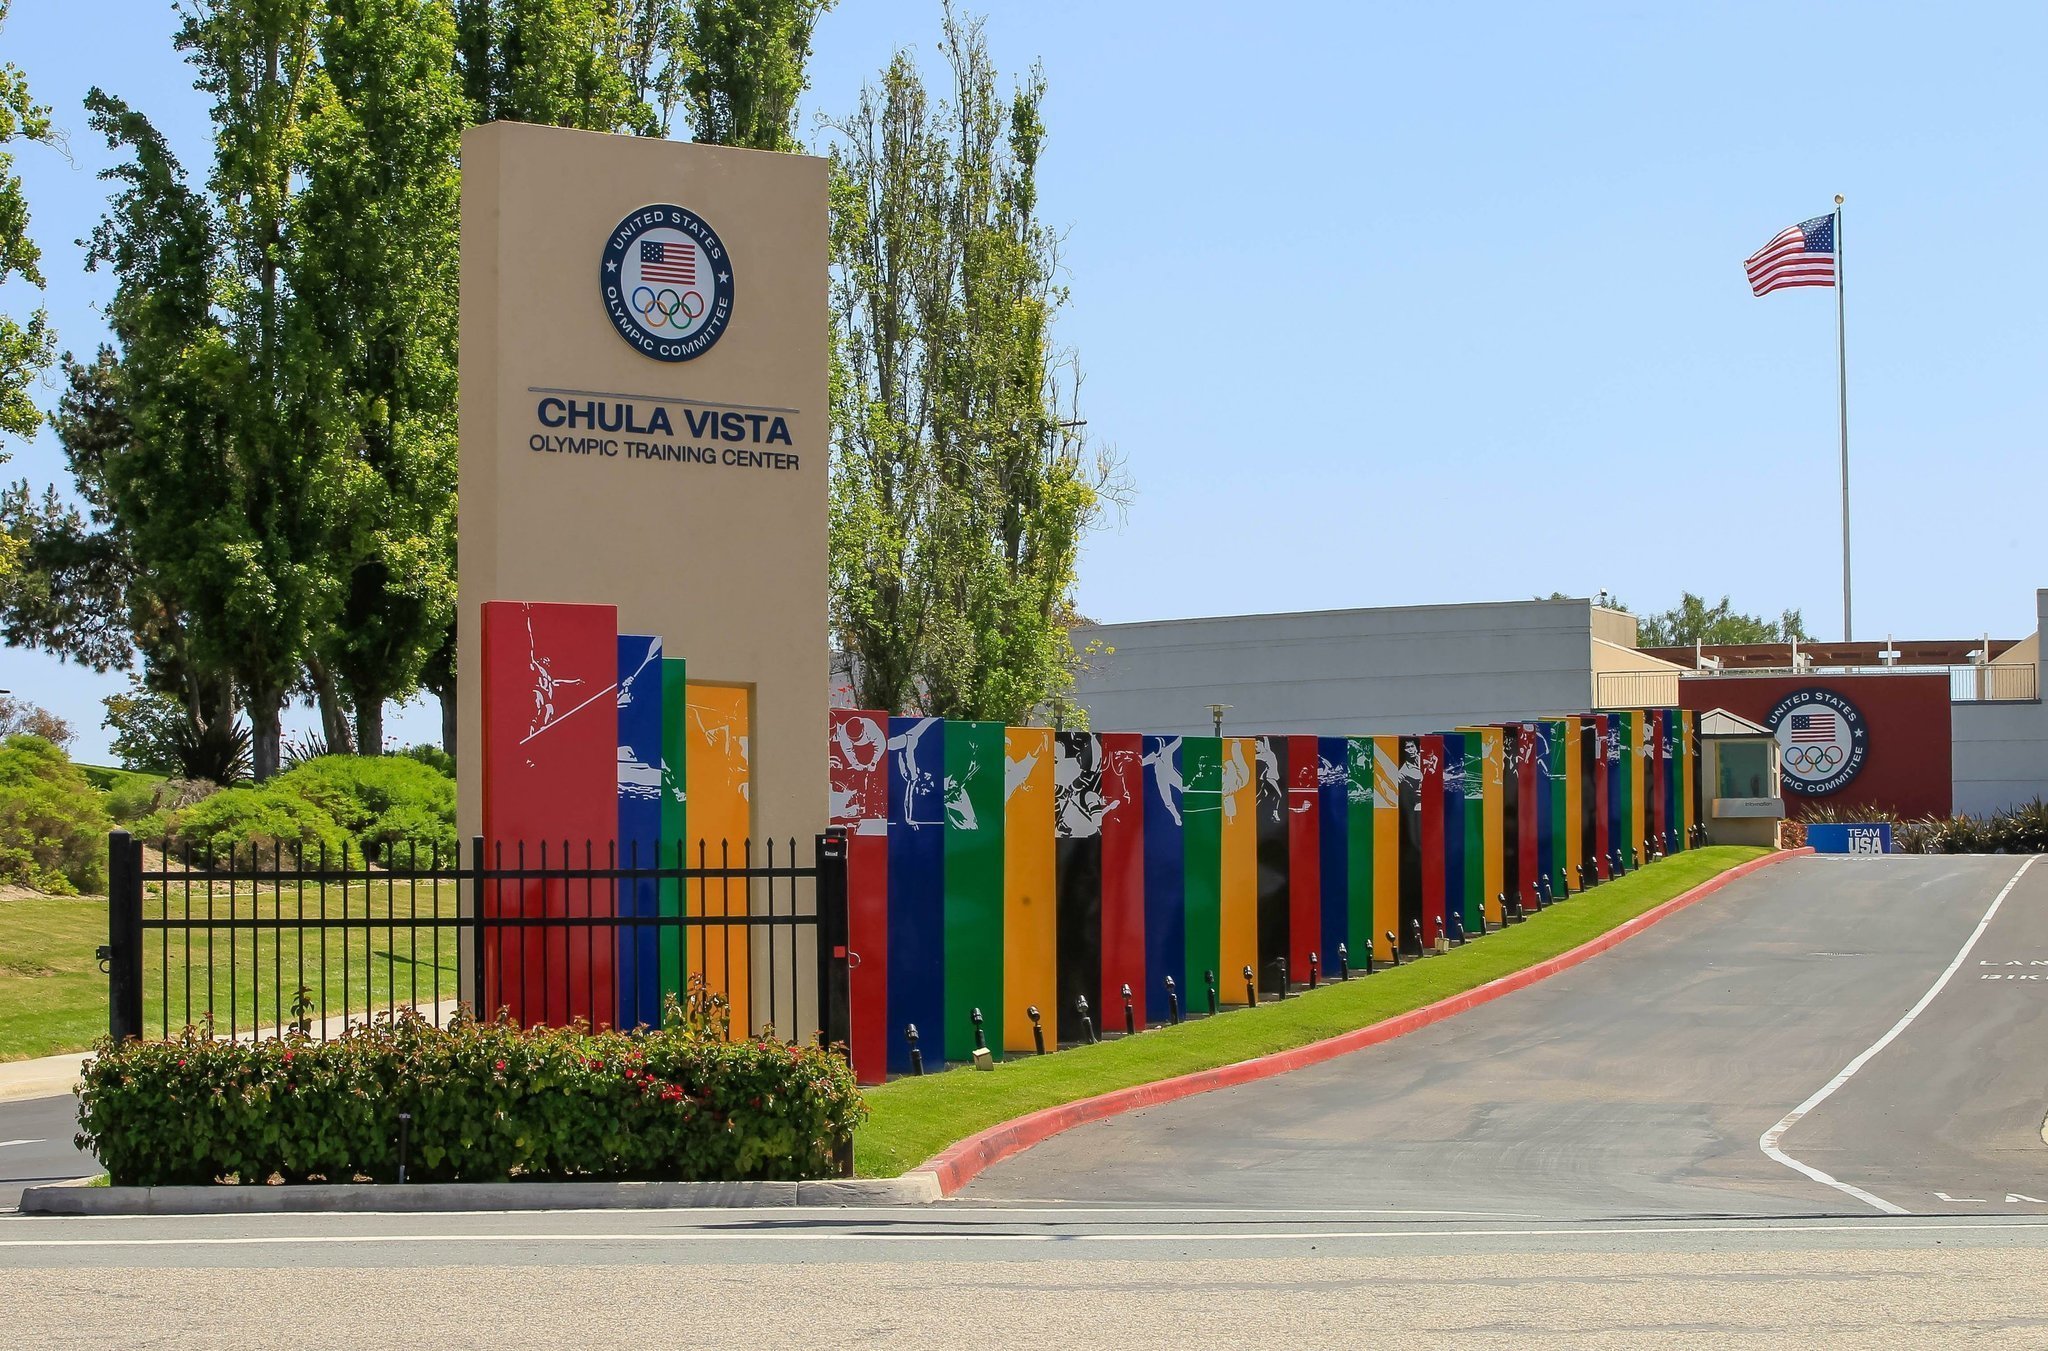 Image result for chula vista elite training center